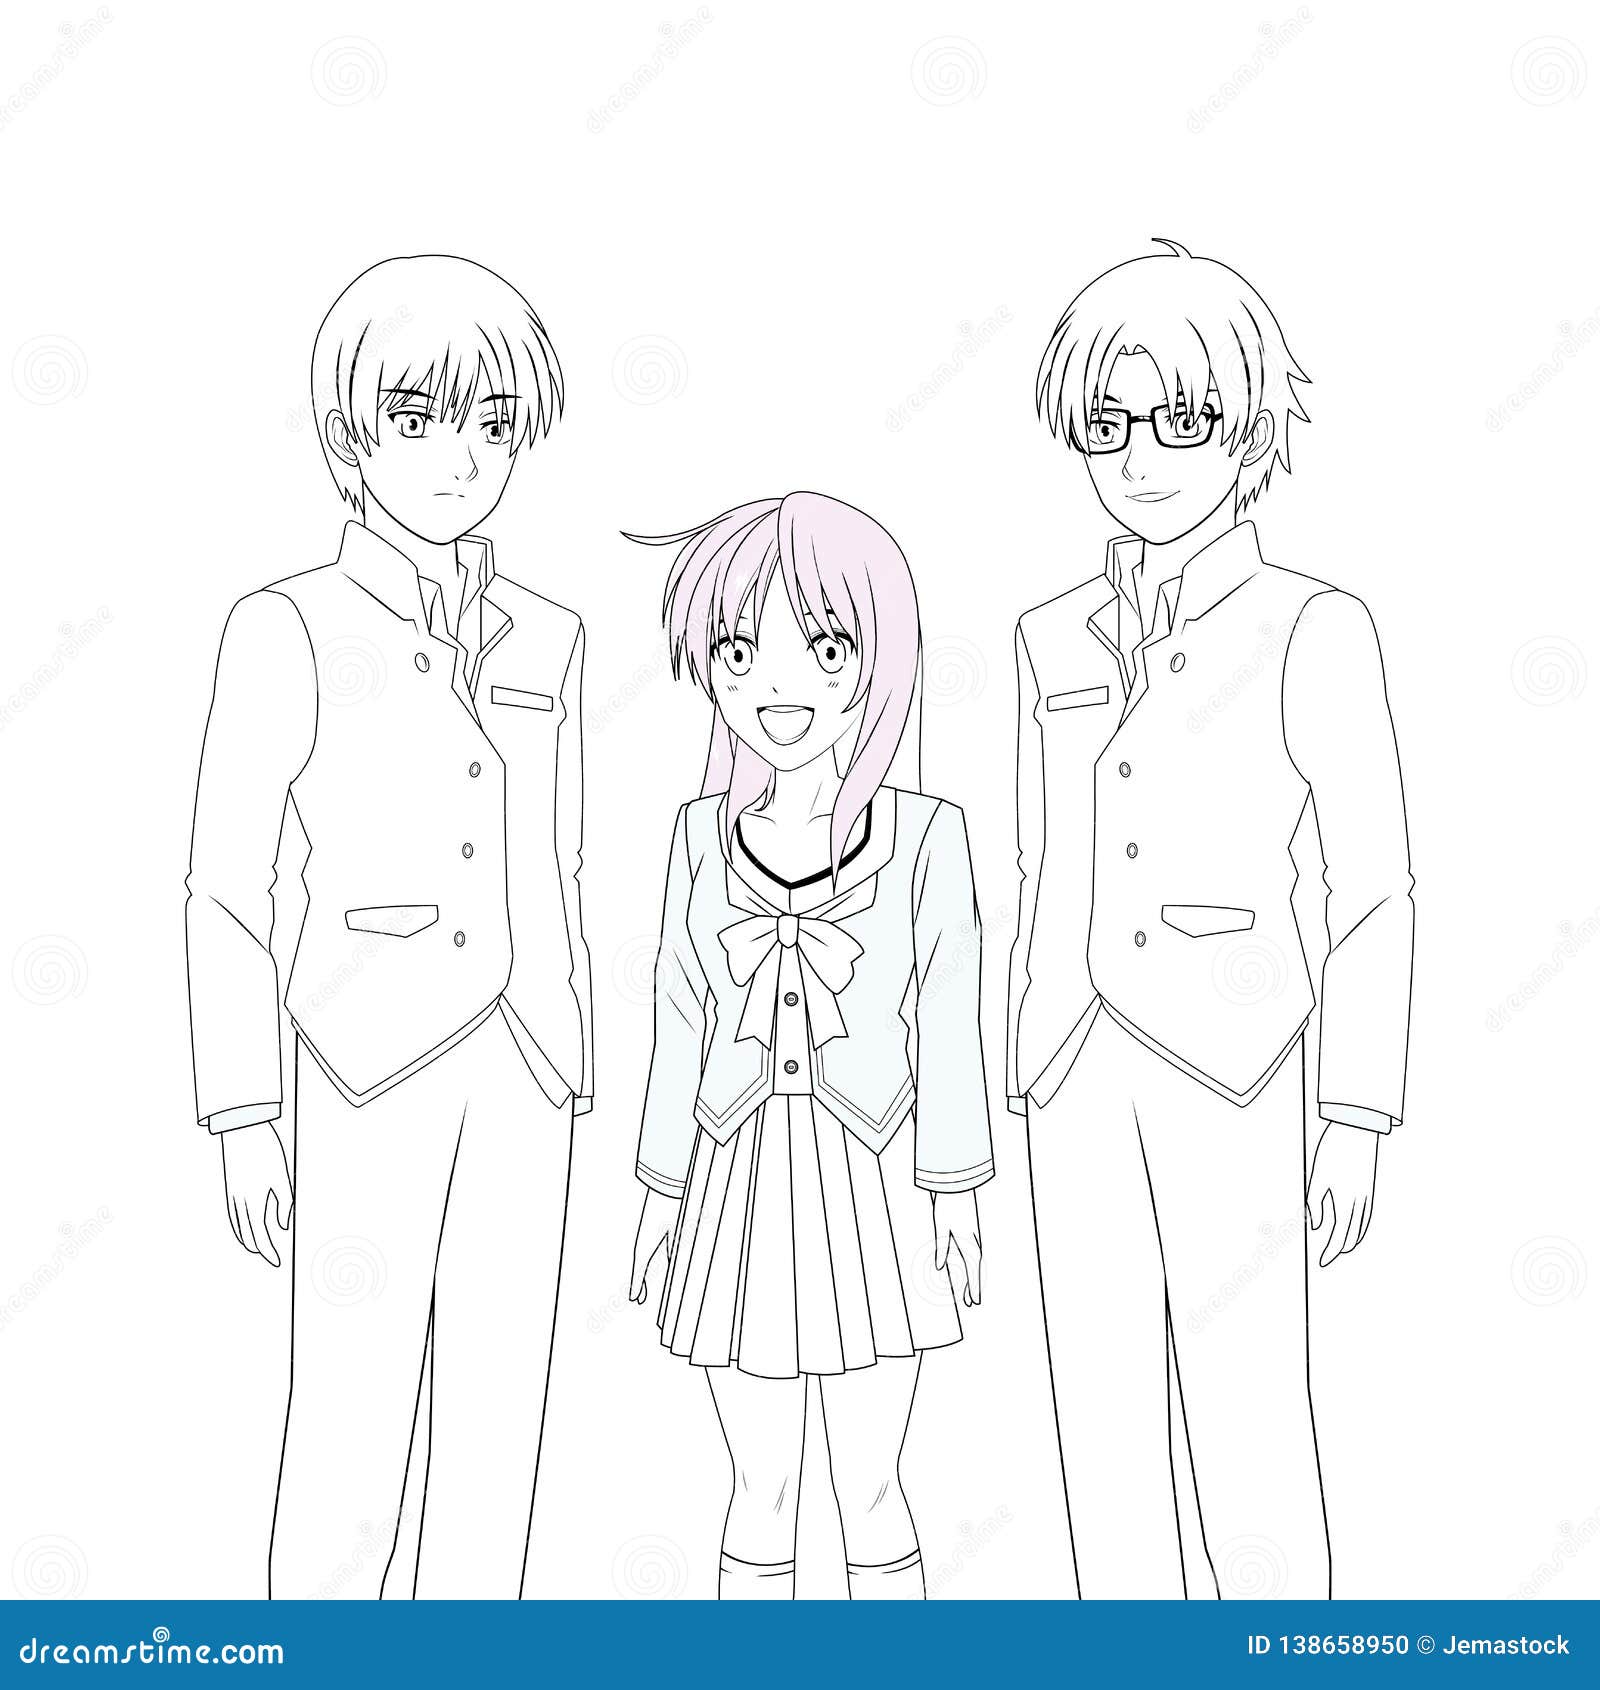 Anime manga group stock vector. Illustration of fashion - 138658950